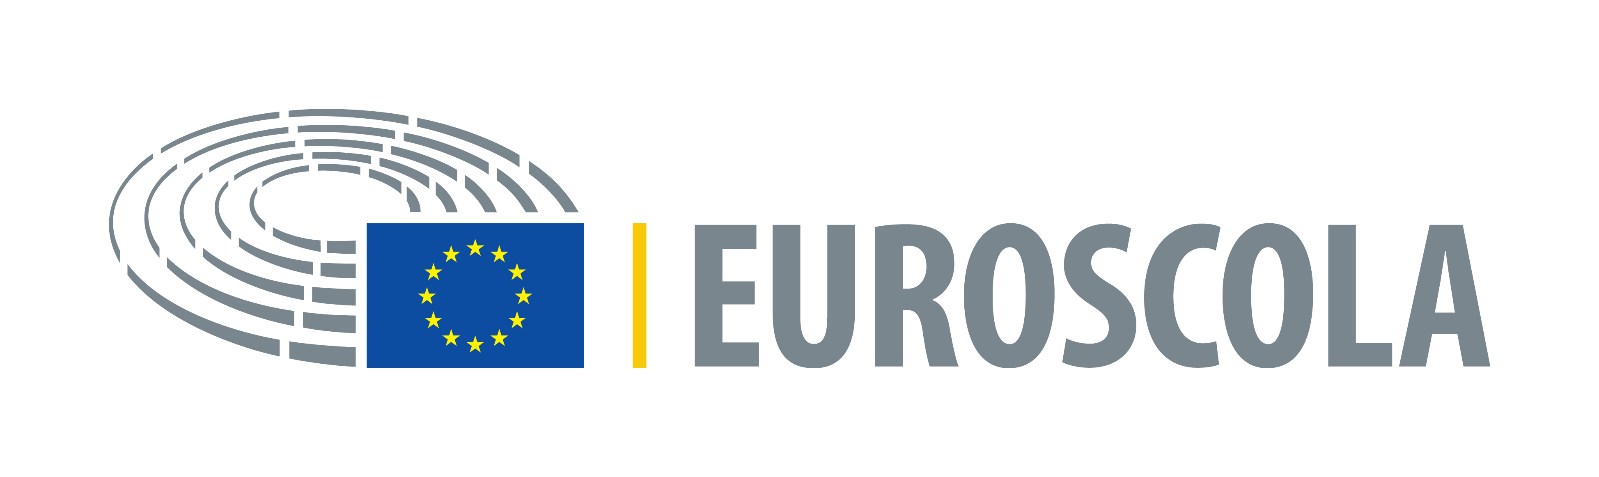 Euroscola-programma